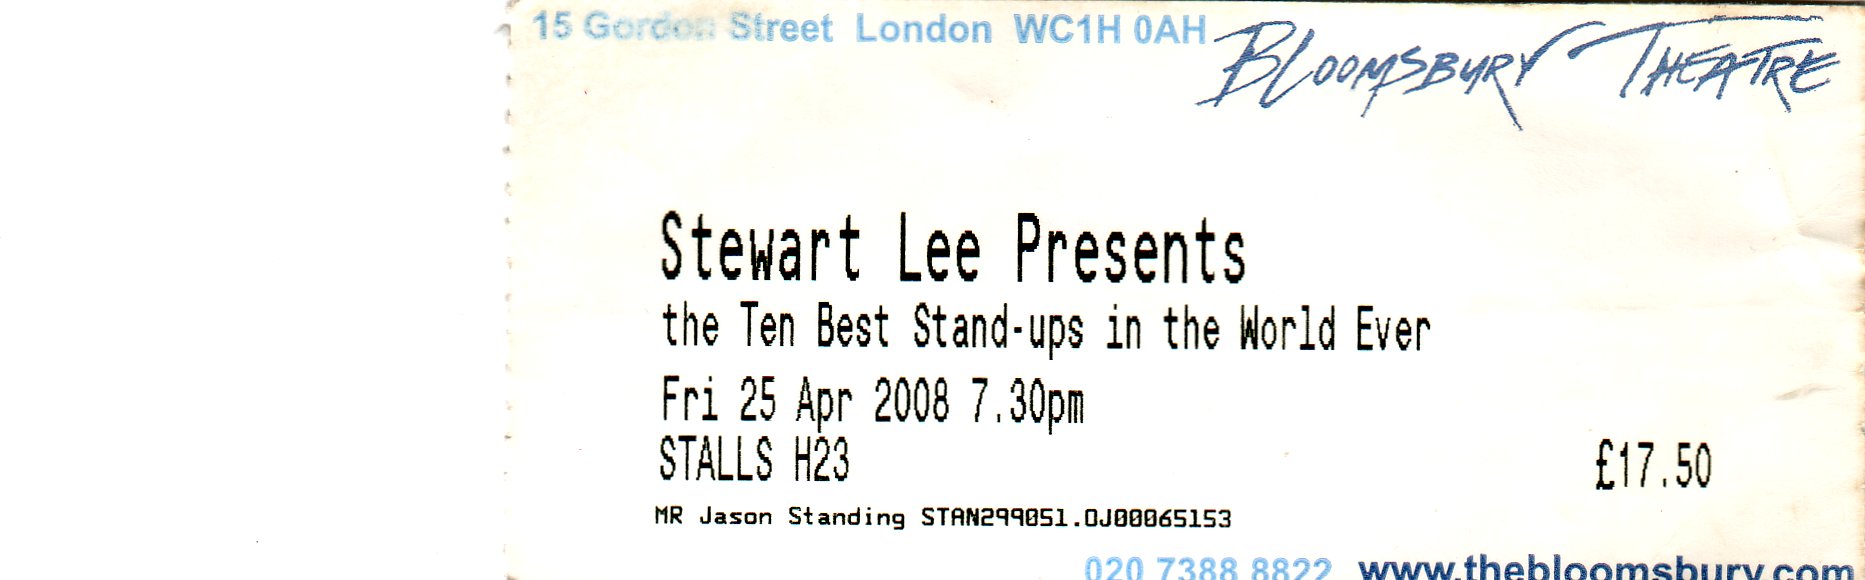 2008-04-25-Stewart Lee Presents the Ten Best Standups In The World Ever